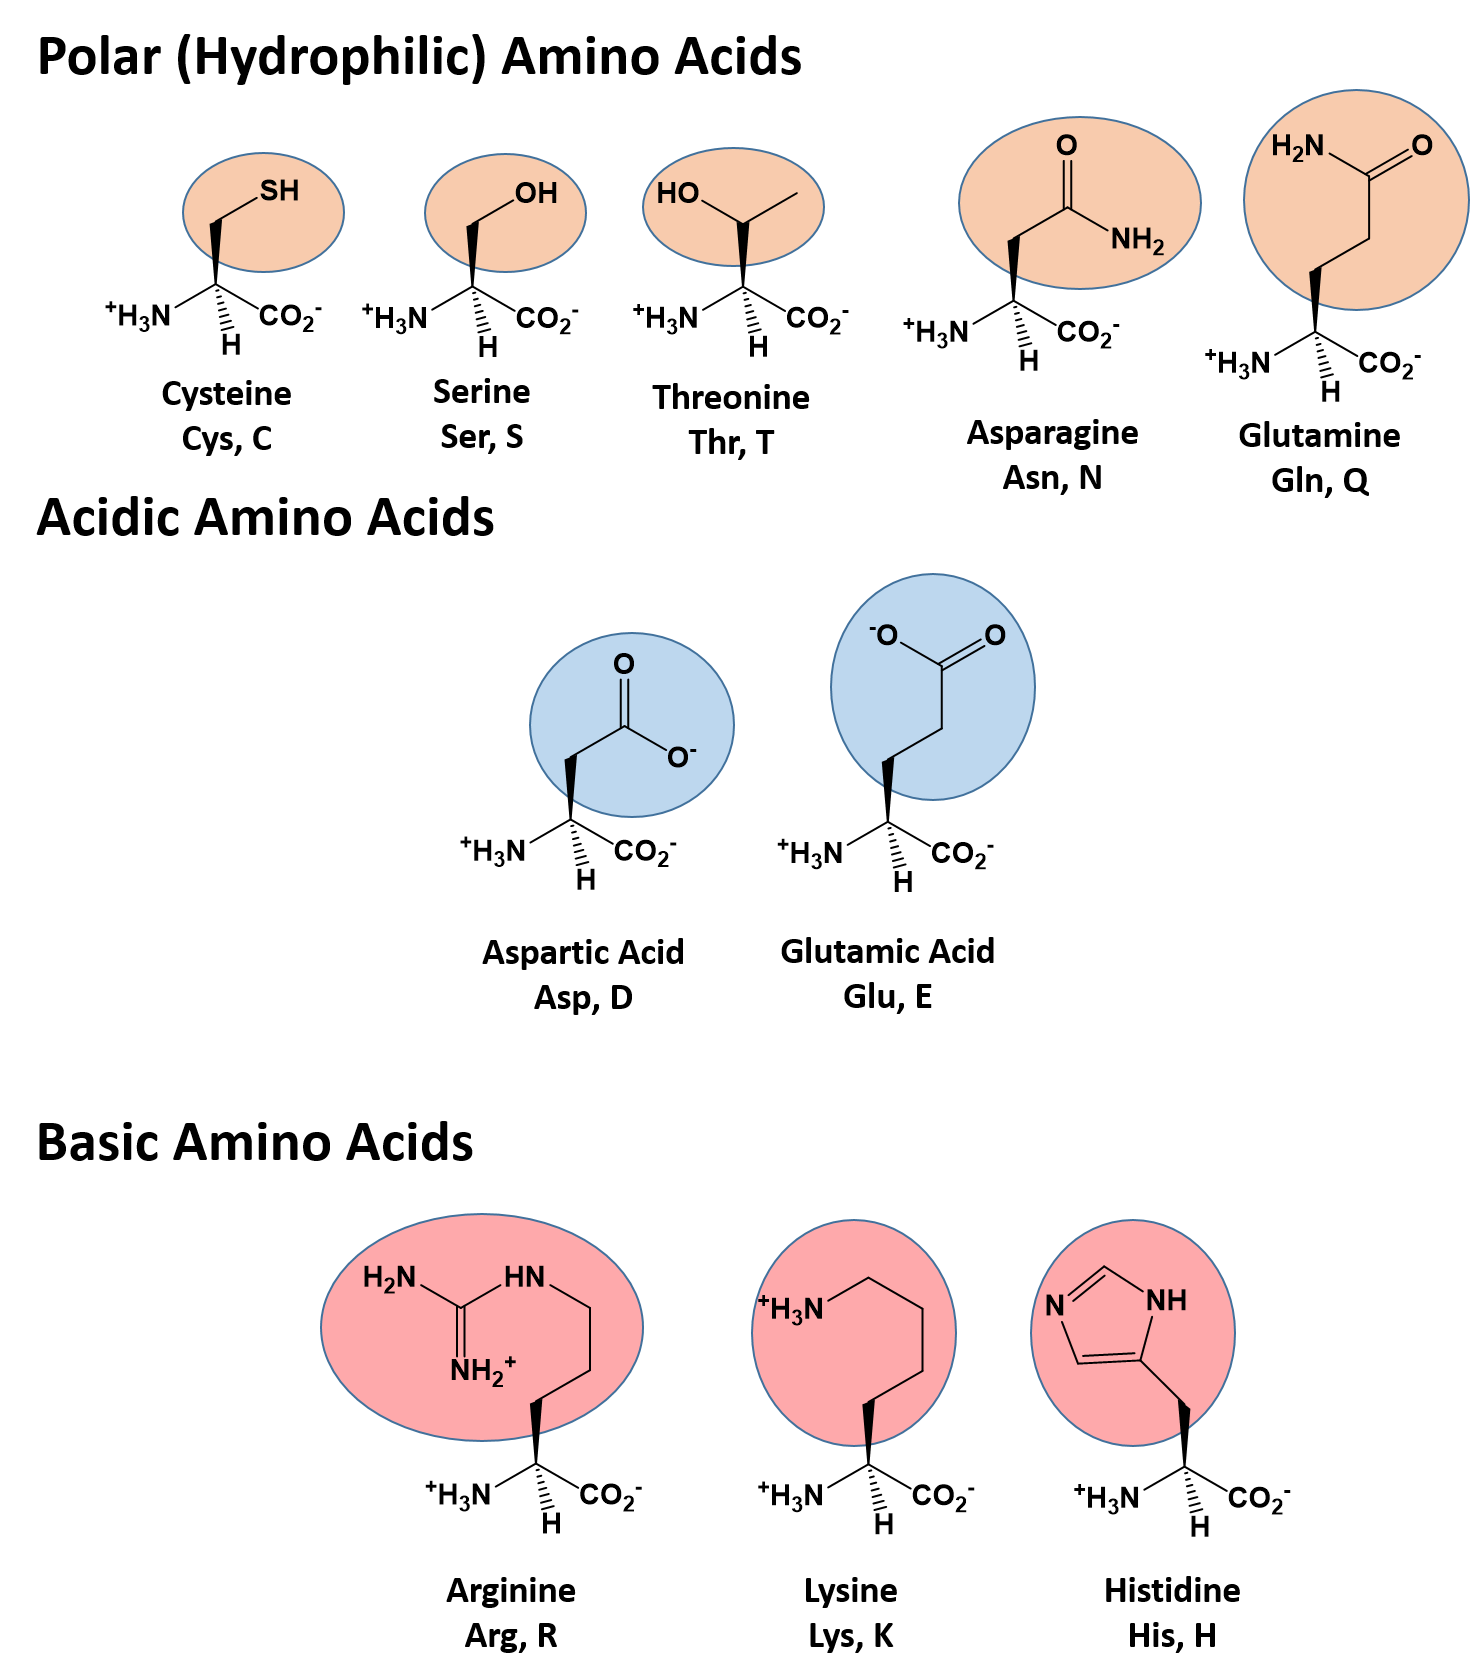 hydrophobic and hydrophilic amino acids